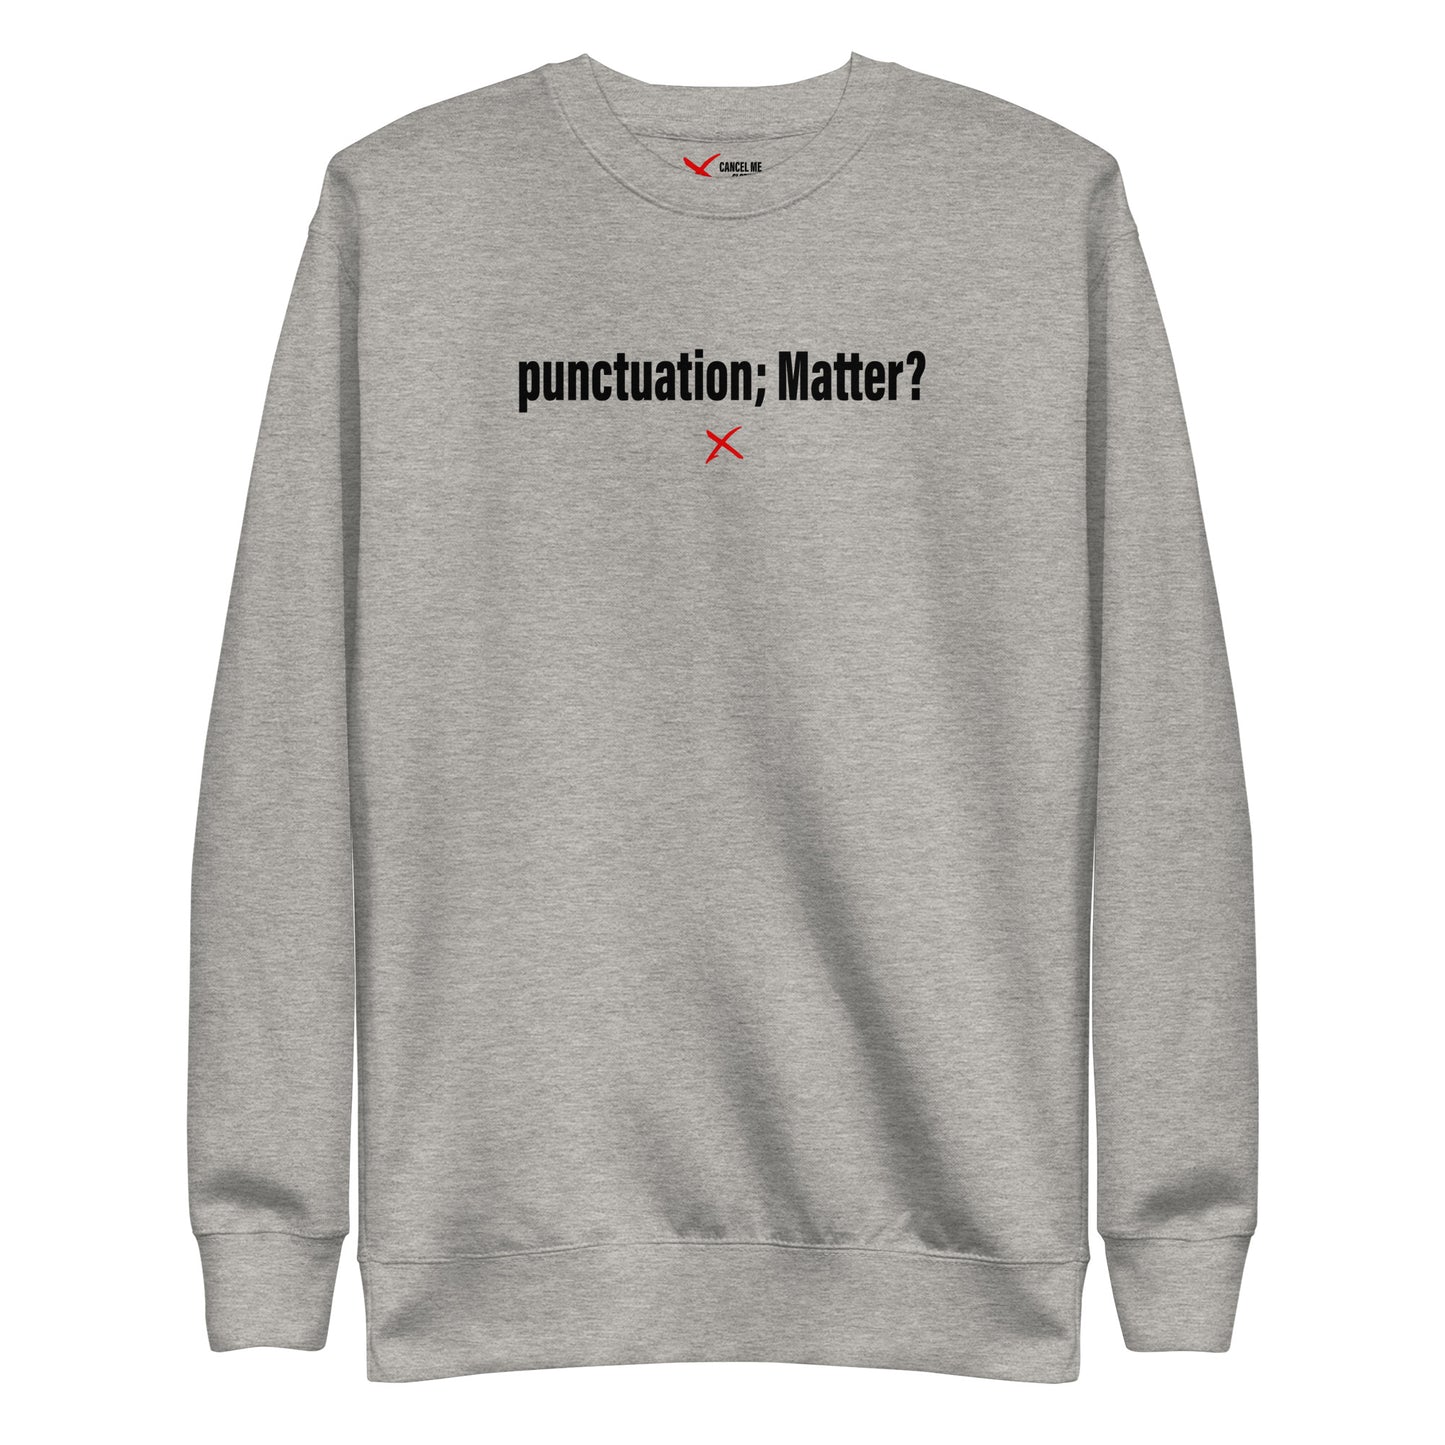 punctuation; Matter? - Sweatshirt